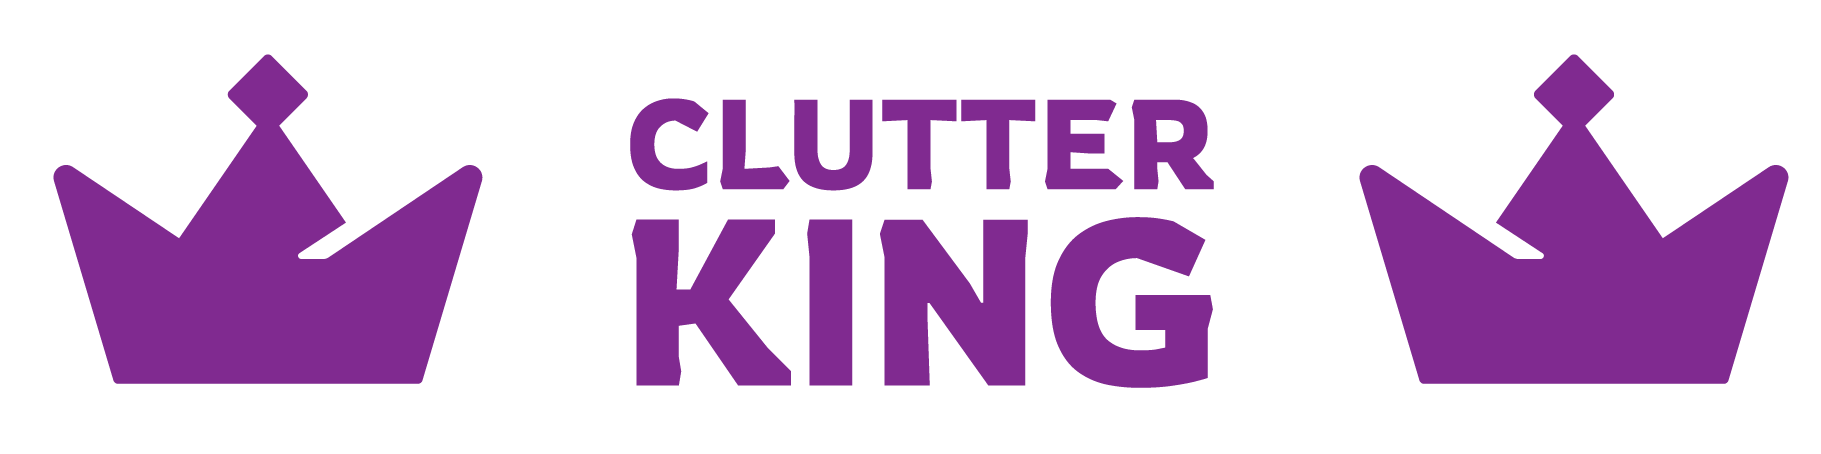 Clutter King